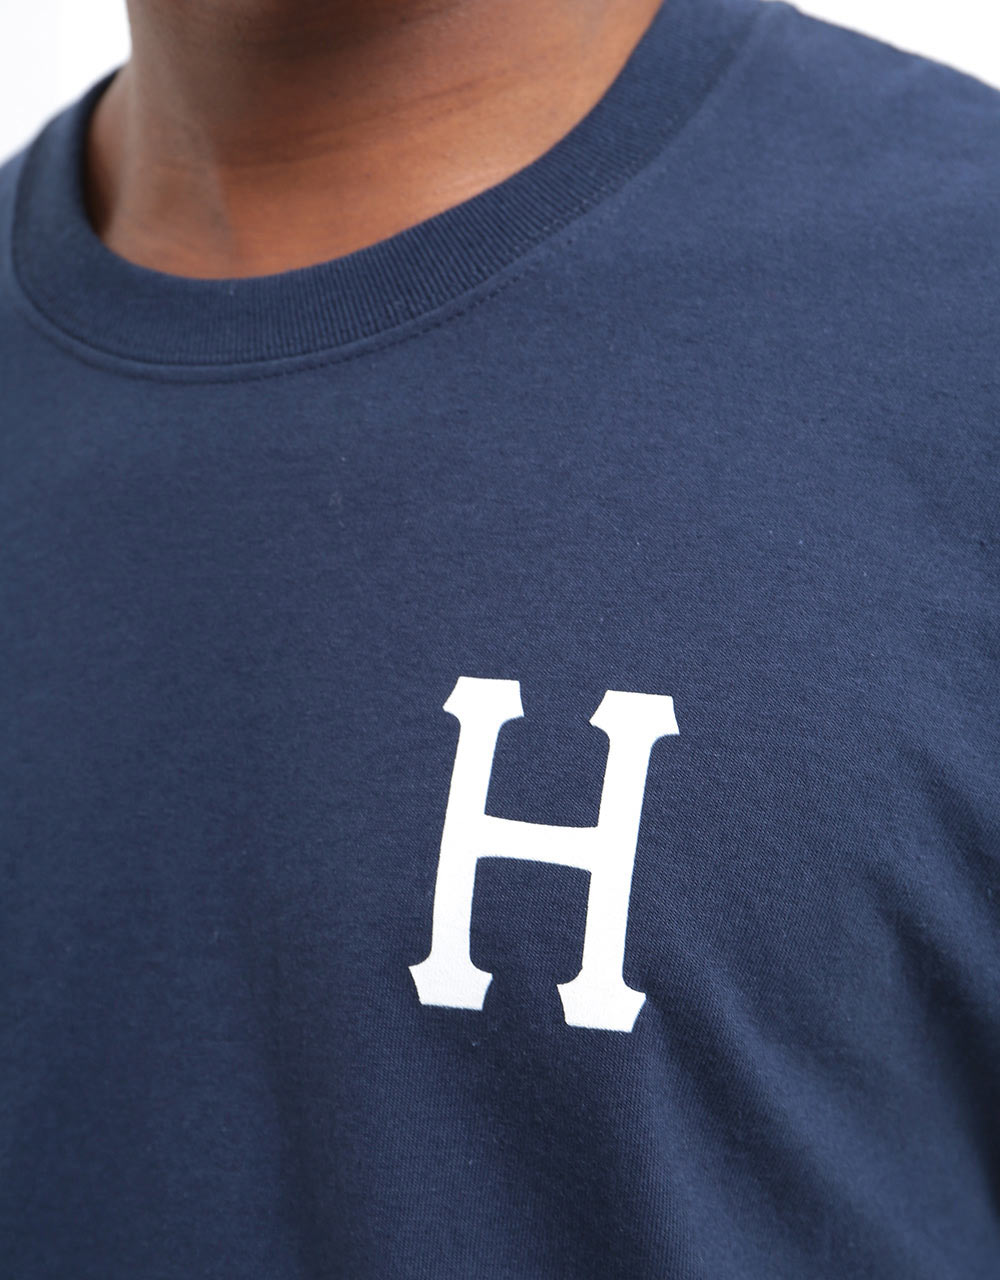 HUF Global Trip Classic H T-Shirt - French Navy